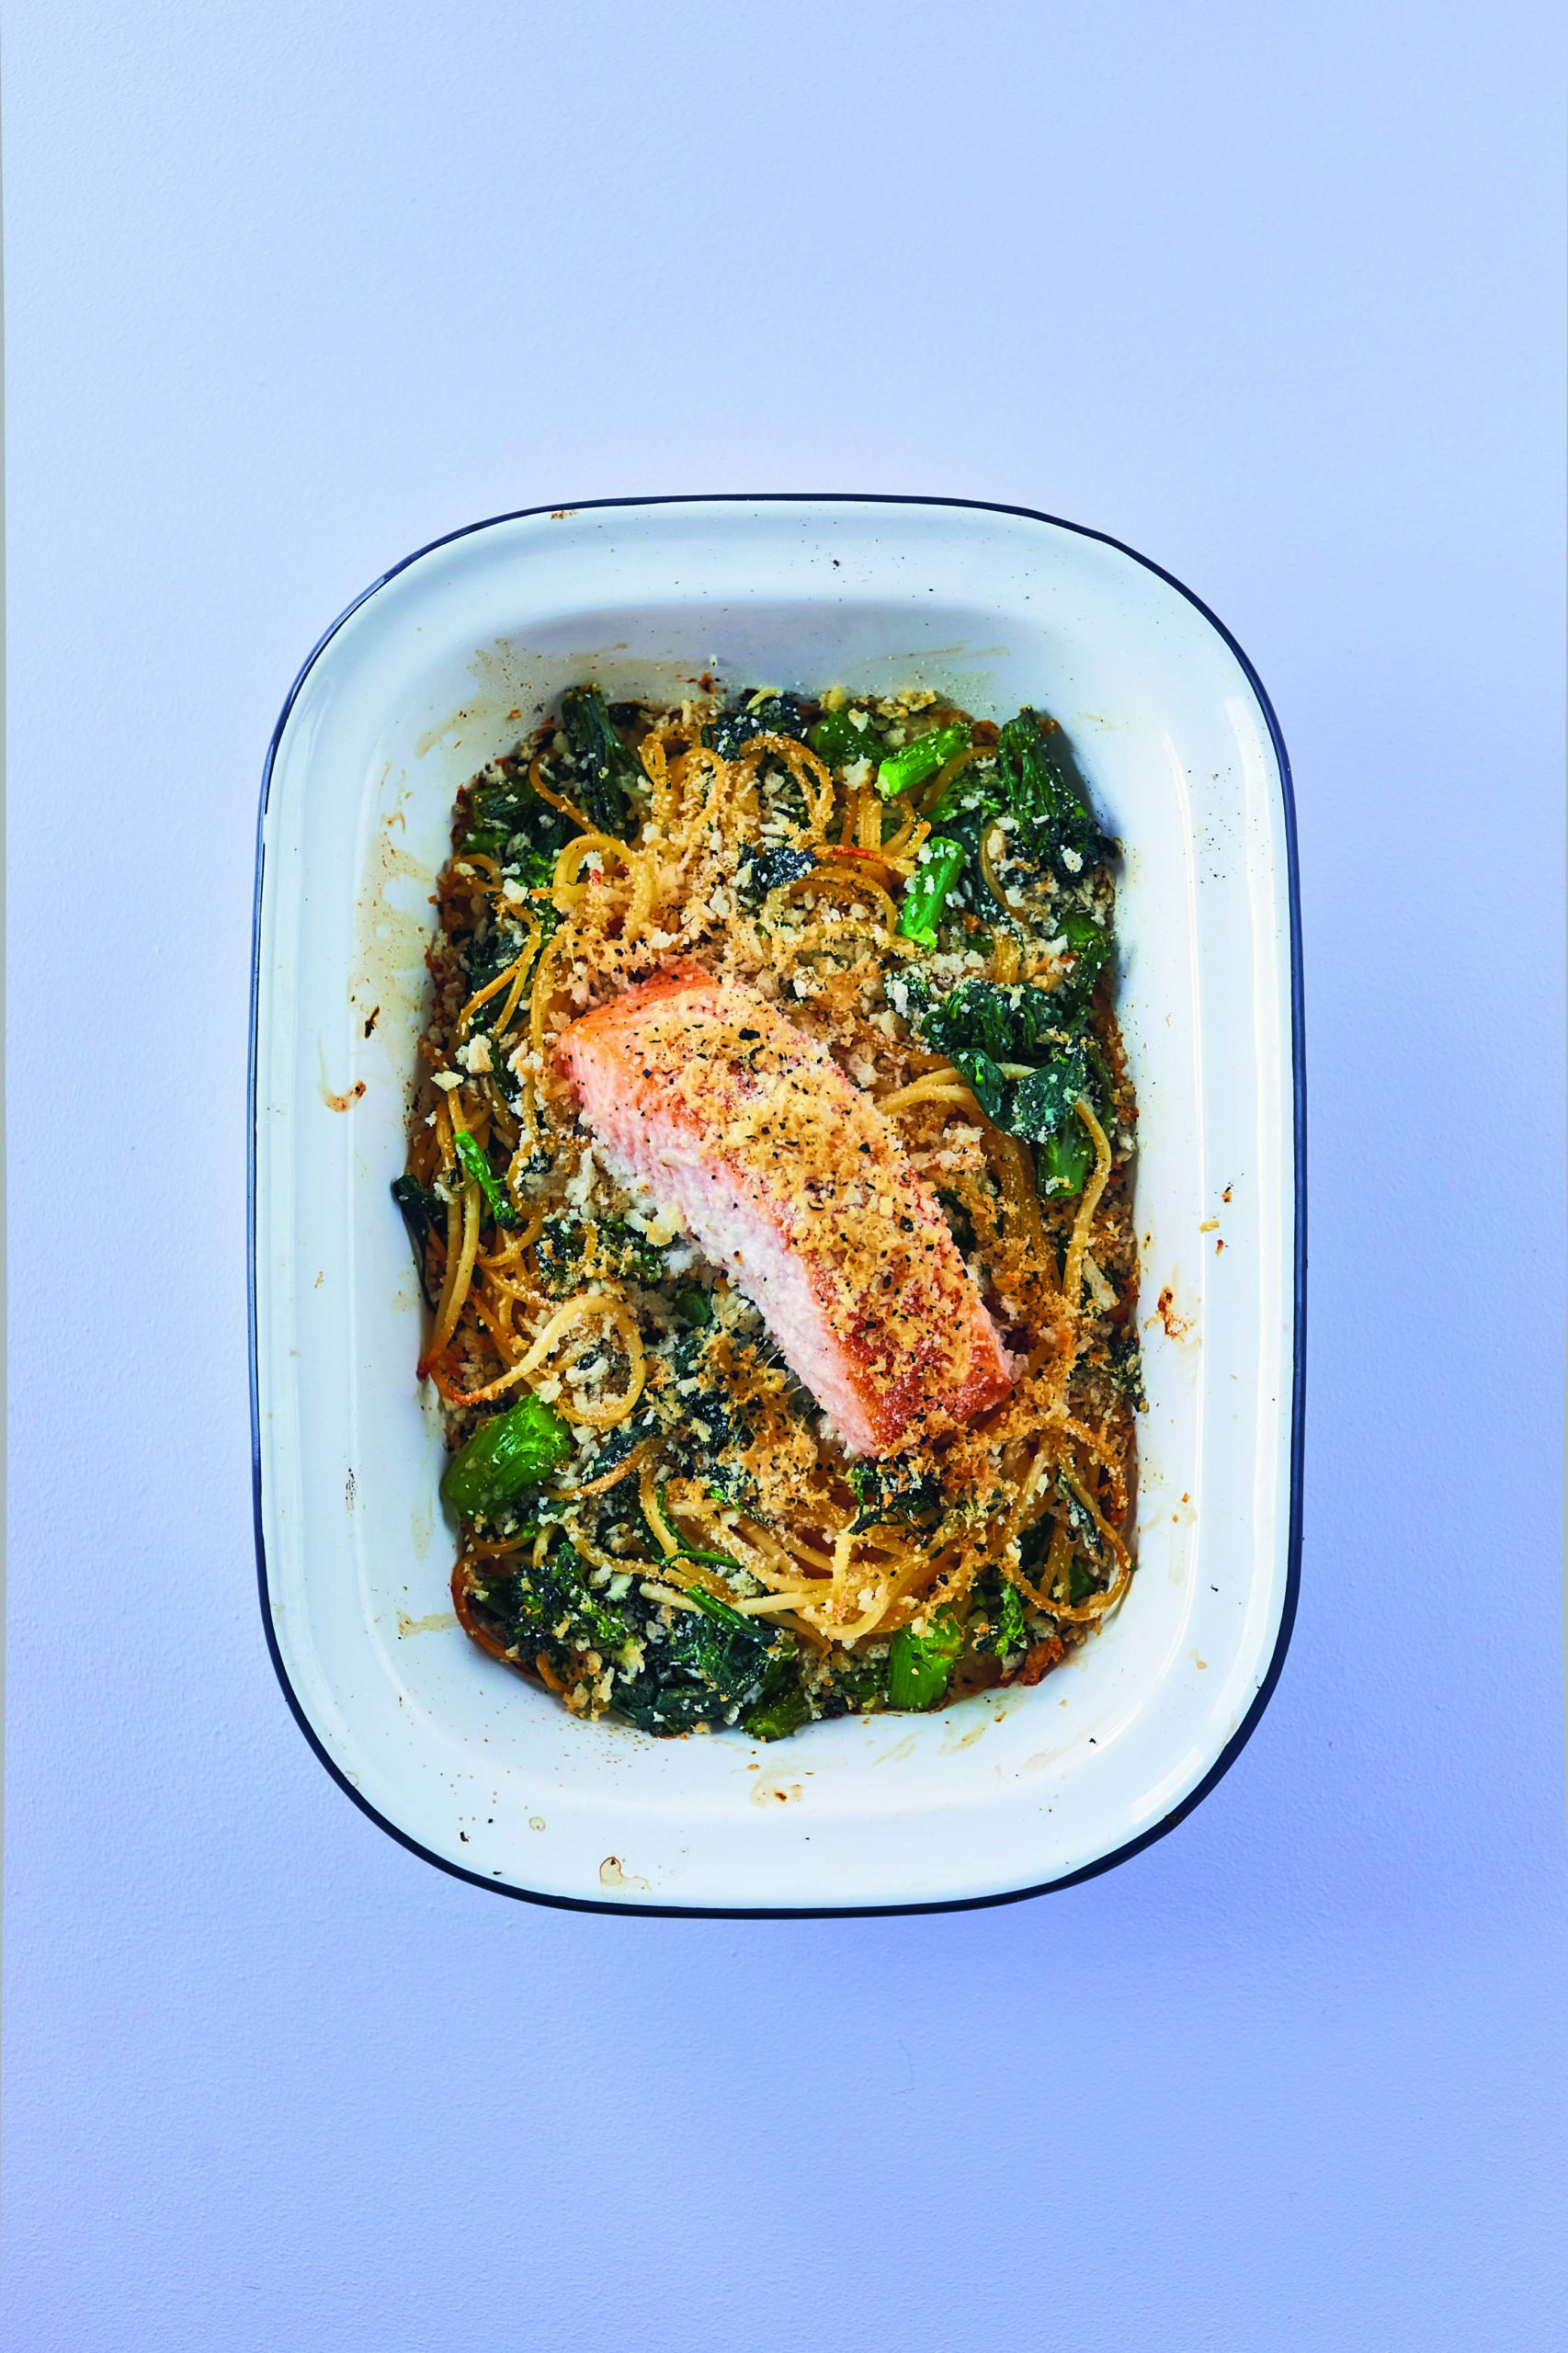 Rukmini Iyer’s Salmon, Broccoli, and Spinach Pasta Bake